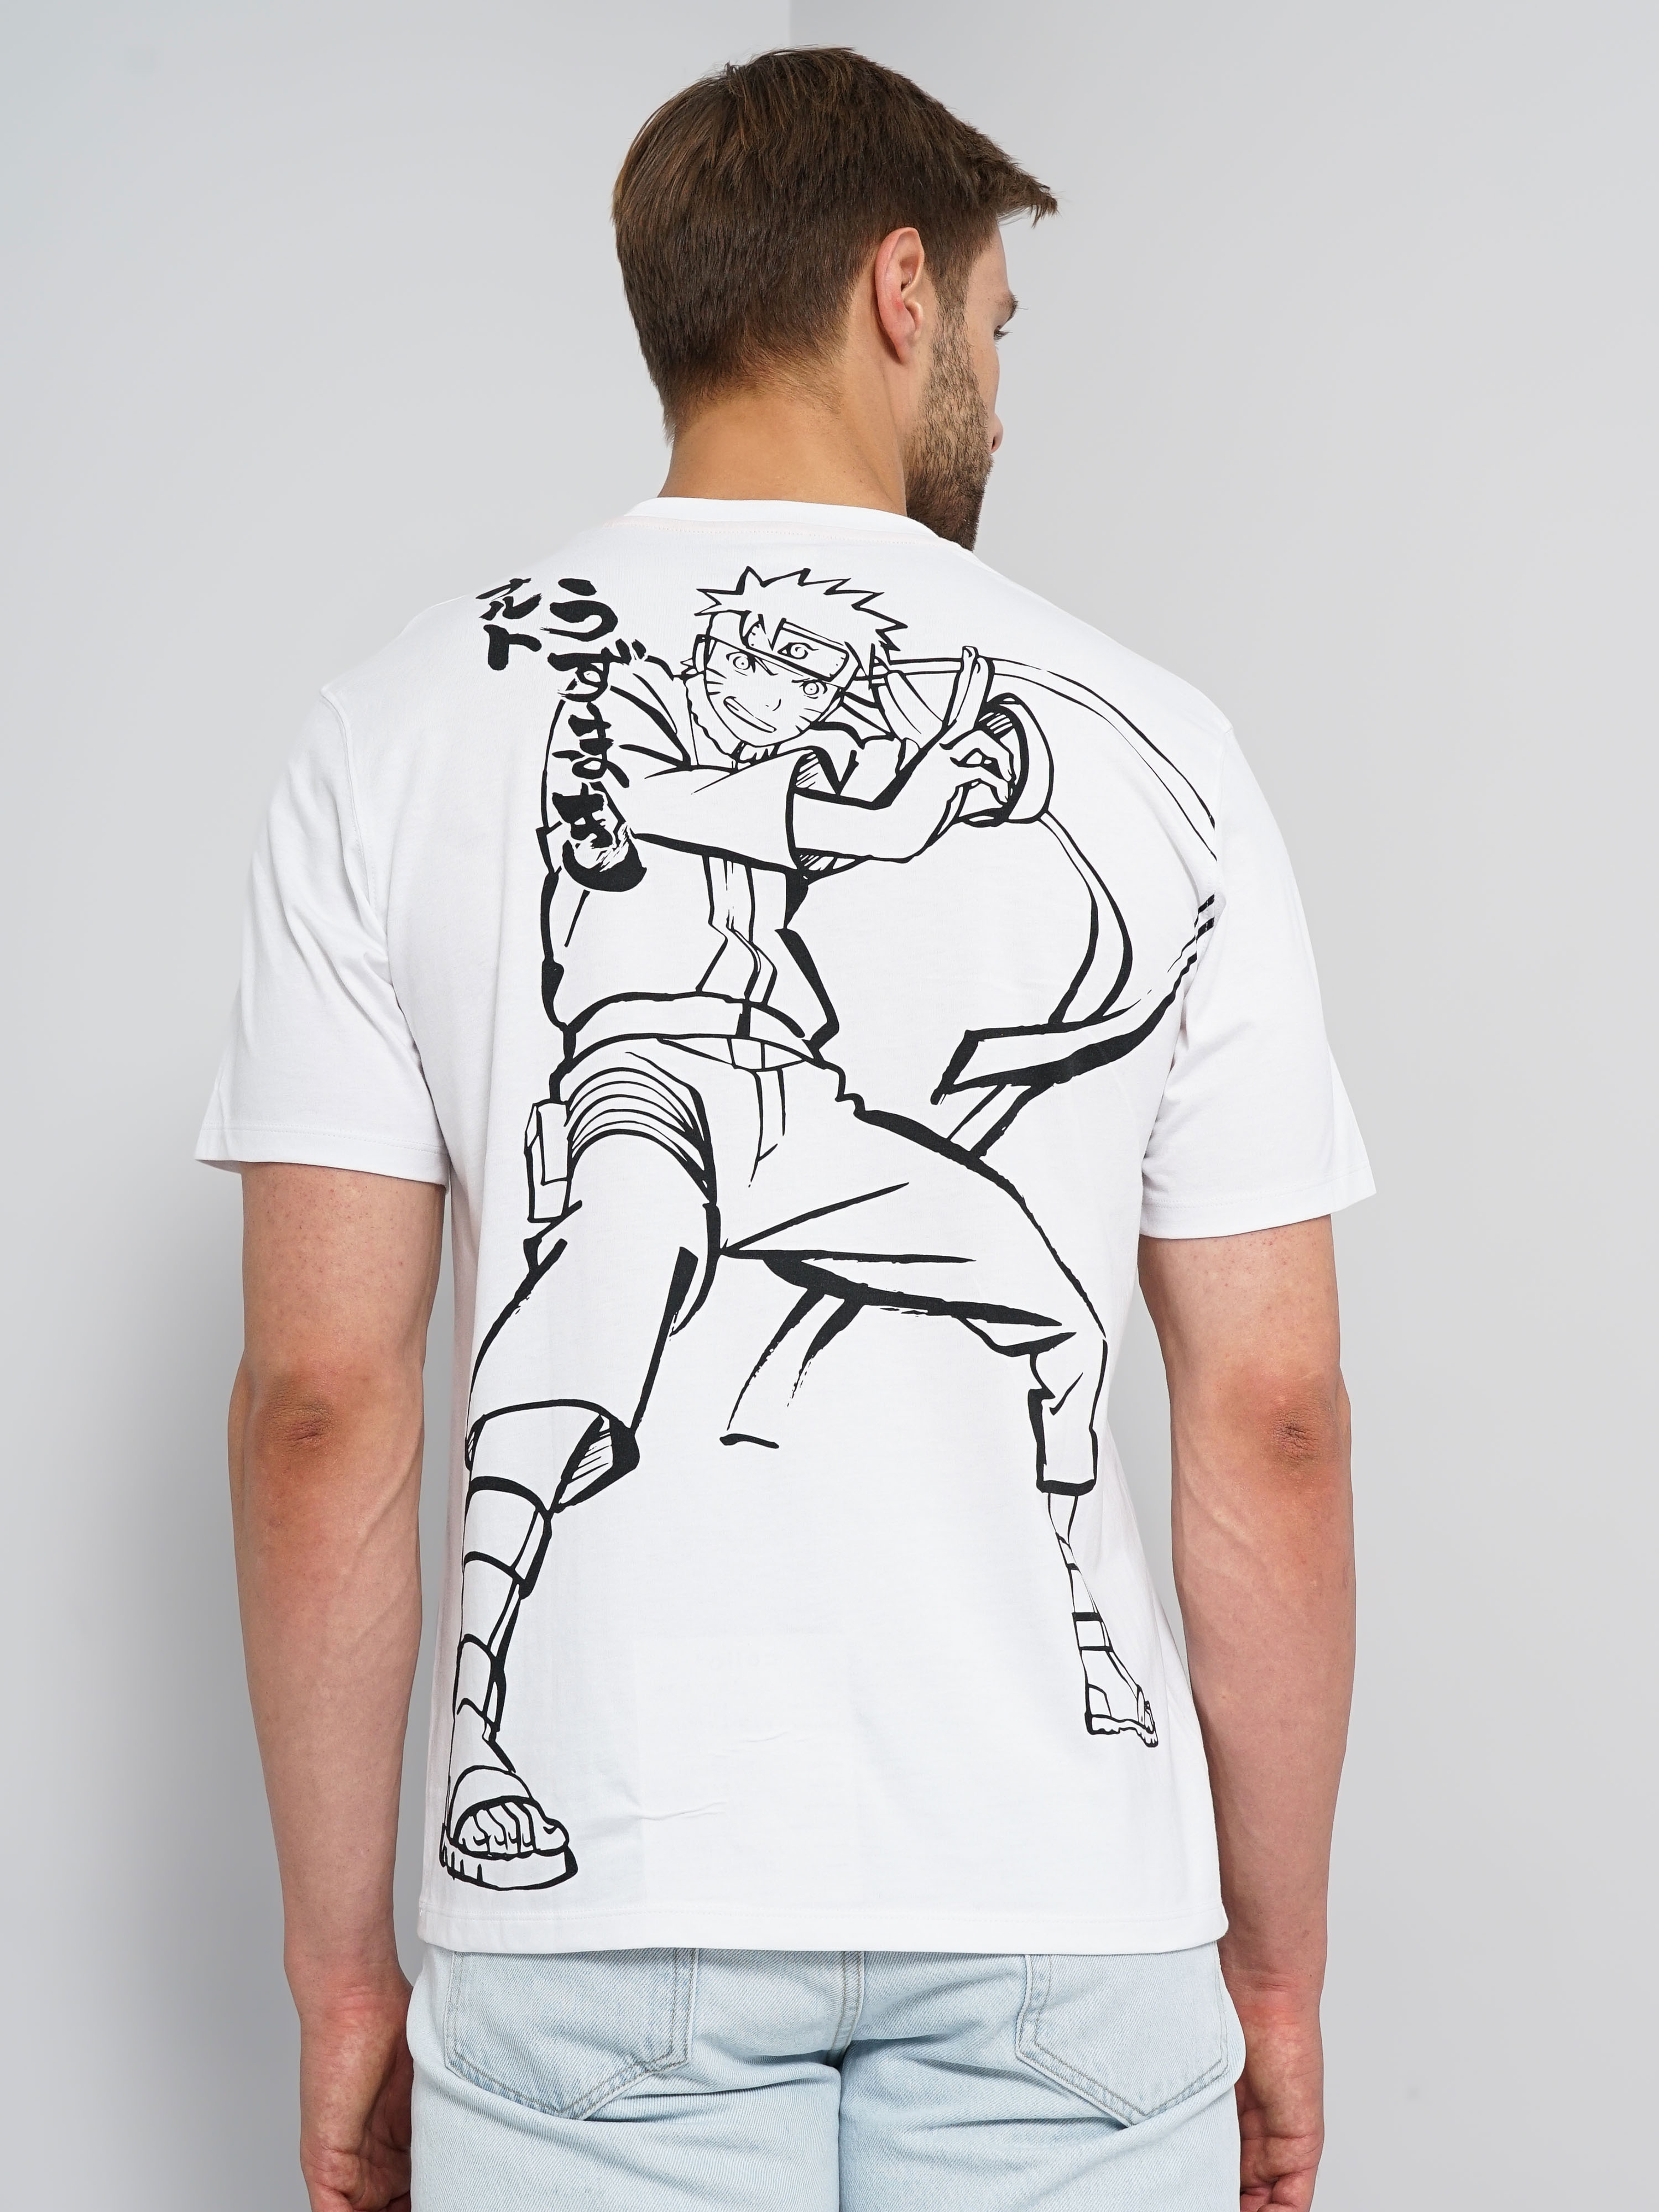 celio | Men's White Printed Regular T-Shirts 3